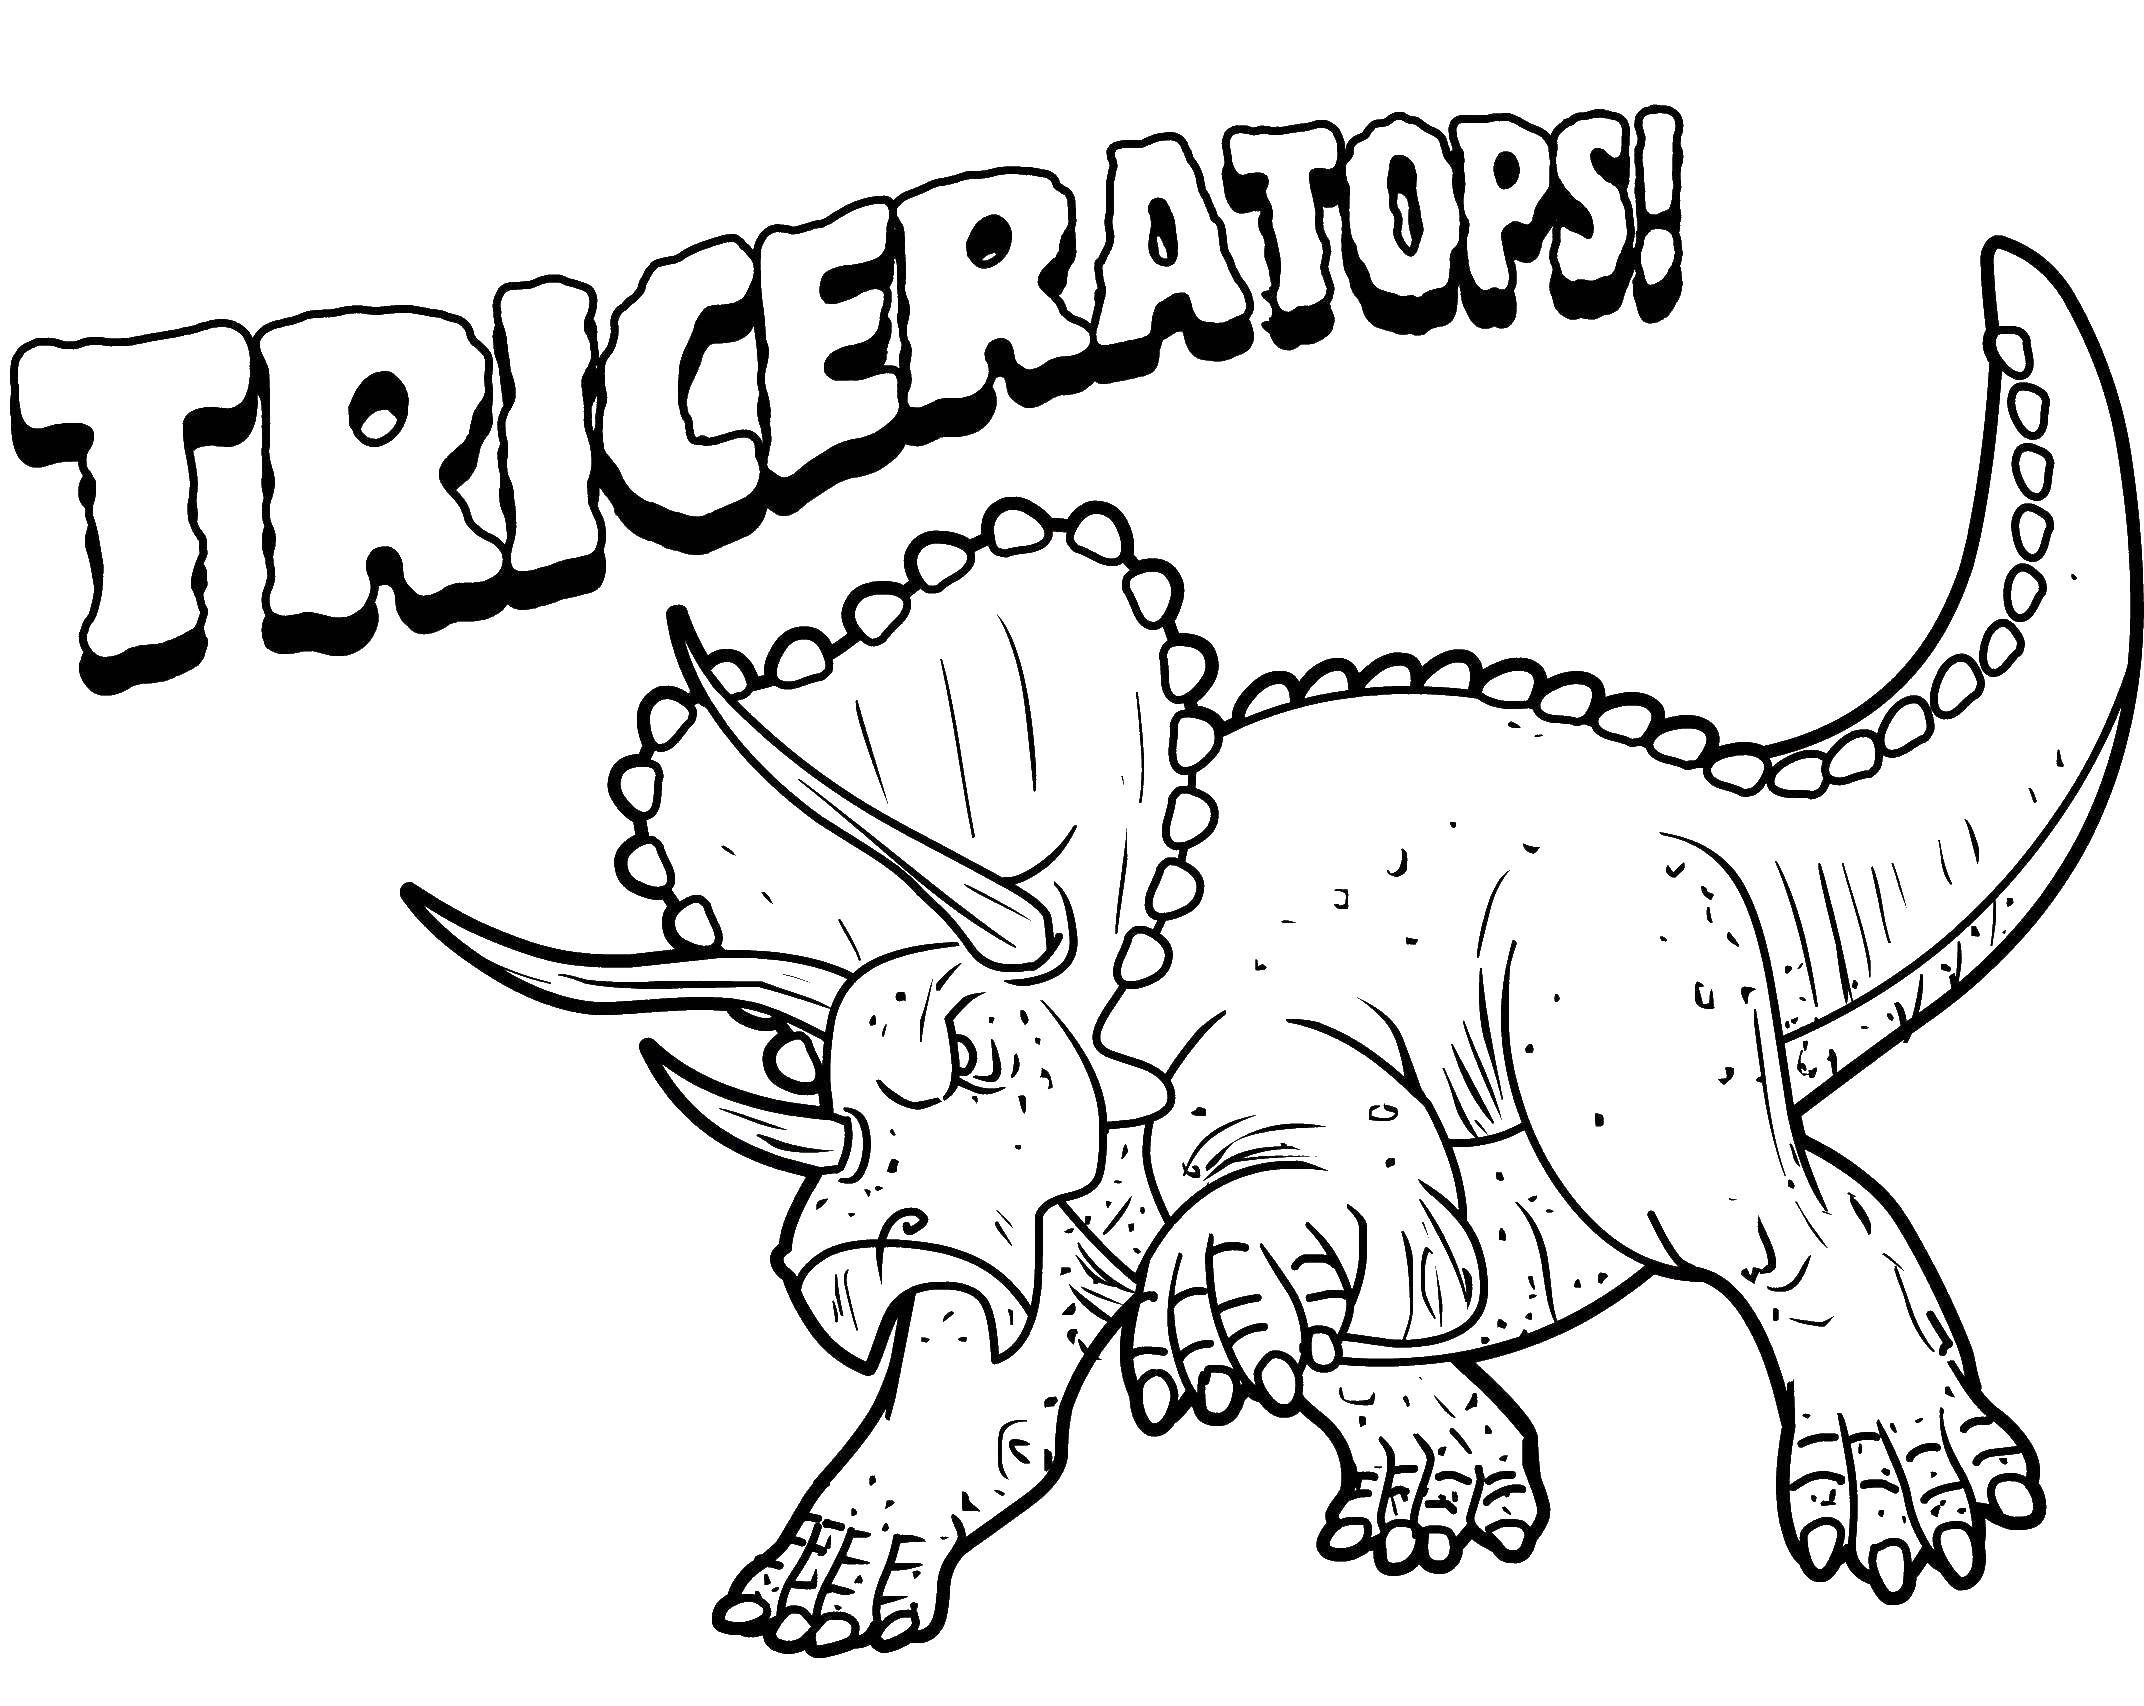 Coloring Triceraptor. Category dinosaur. Tags:  Triceratops, dinosaur.